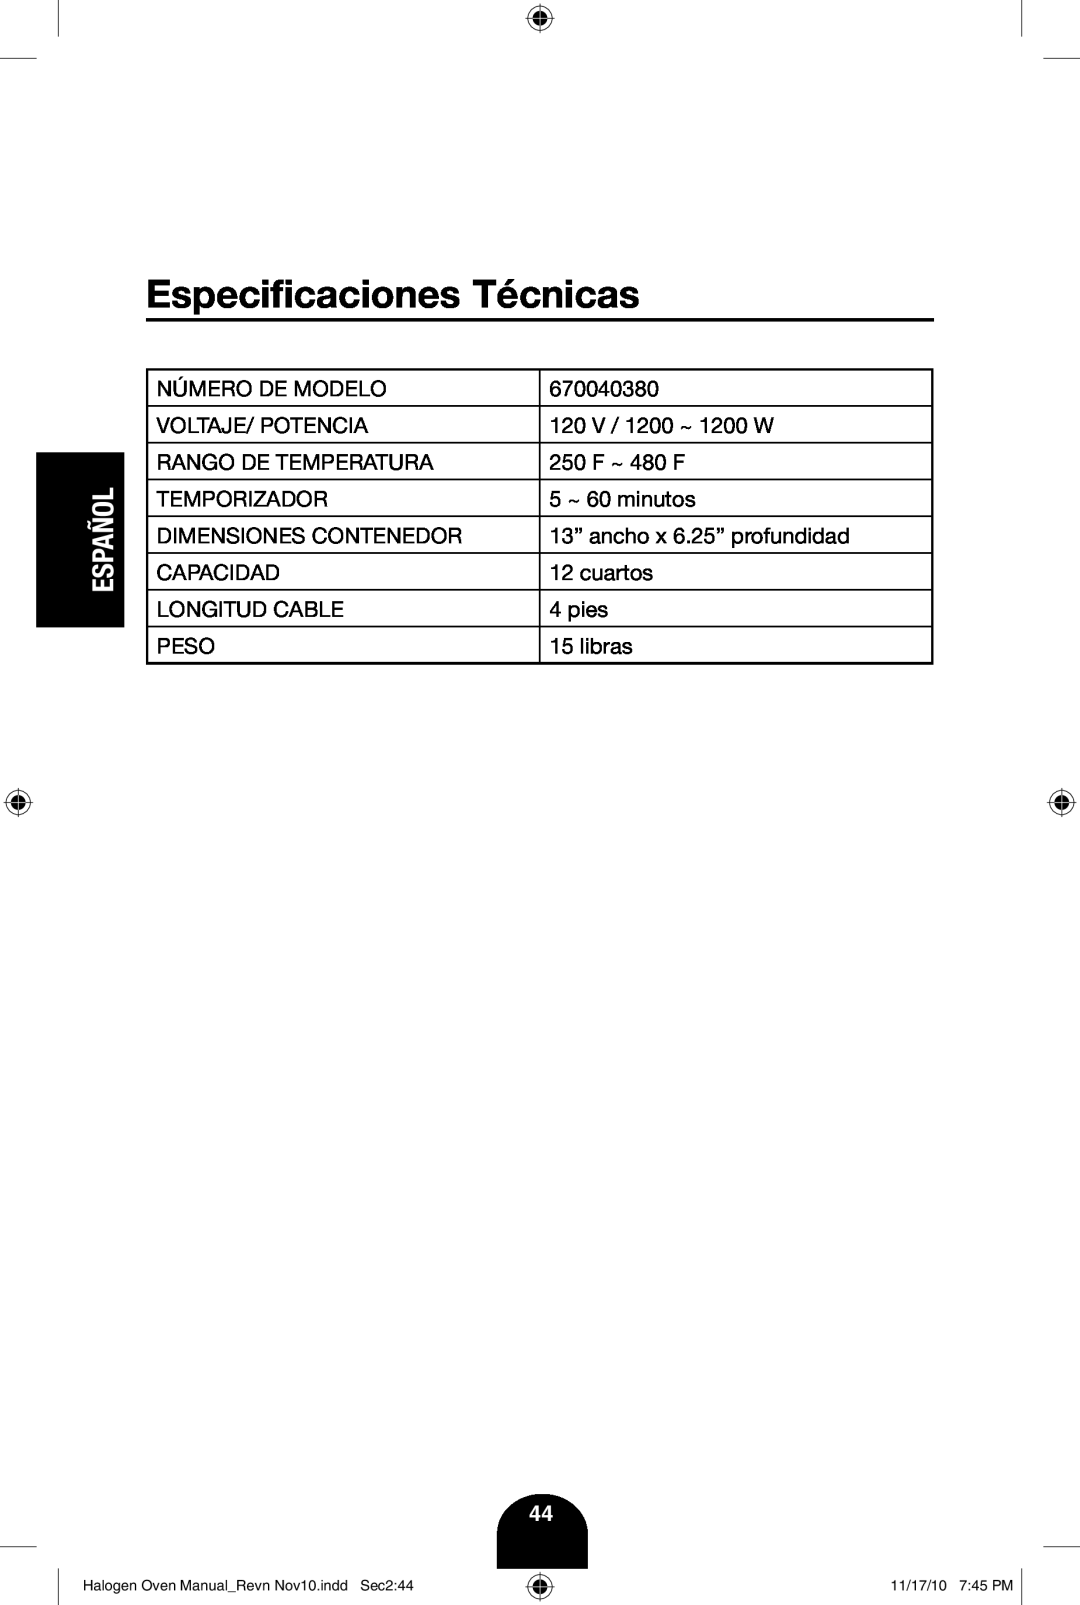 Fagor America 670040380 user manual Especificaciones Técnicas, Español 